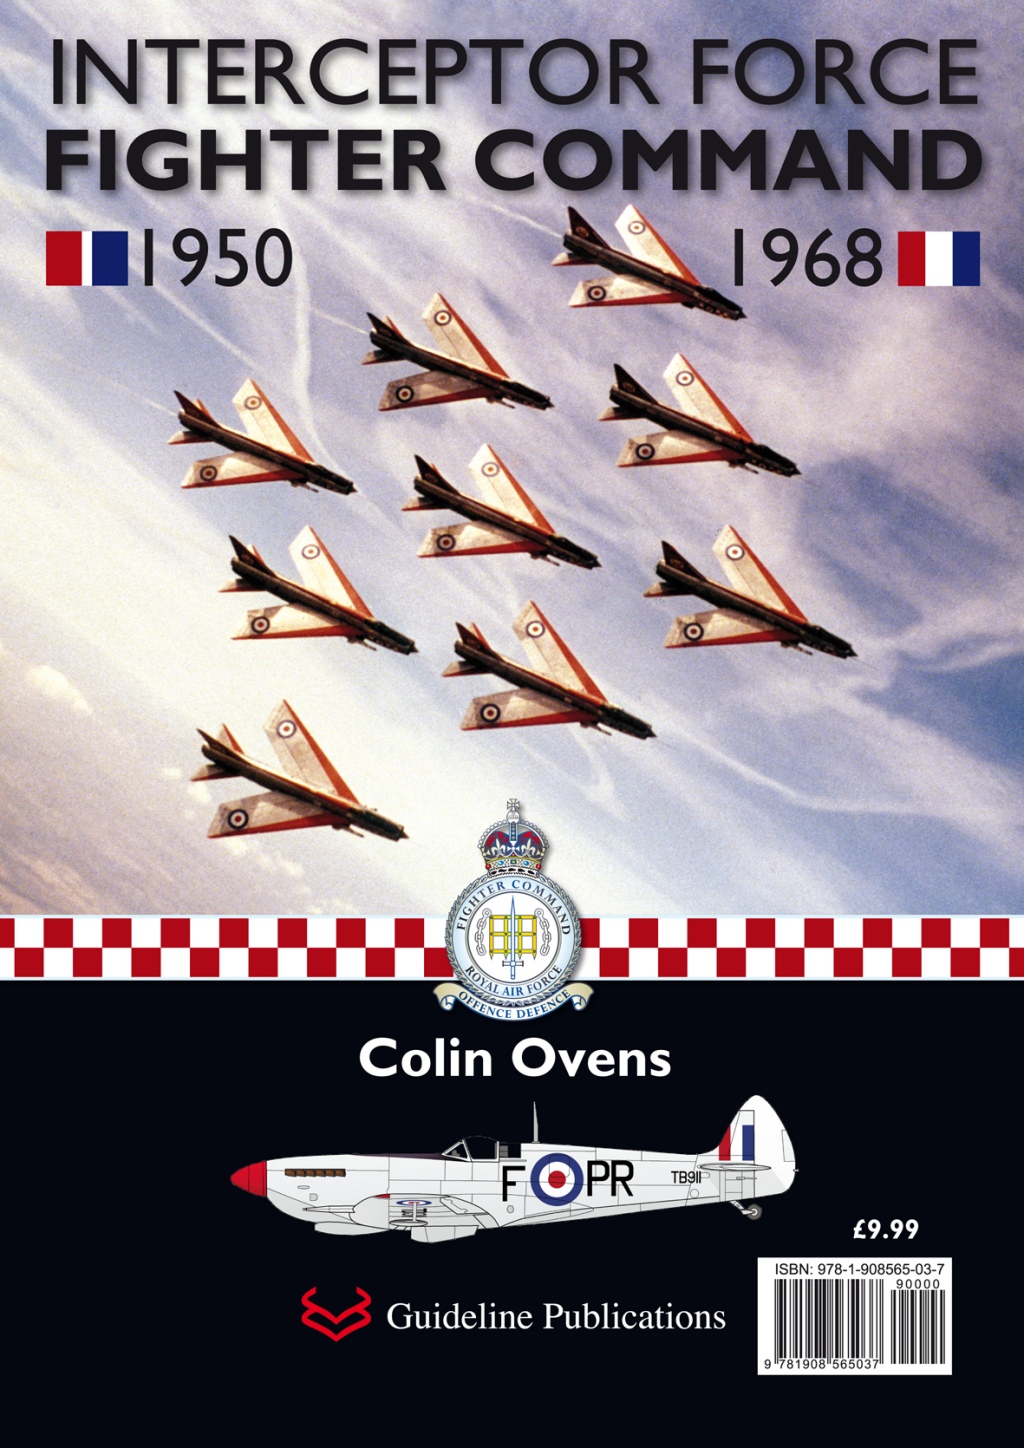 Guideline Publications Ltd Interceptor Force Fighter Command 1950 - 1968 Colin Ovens 